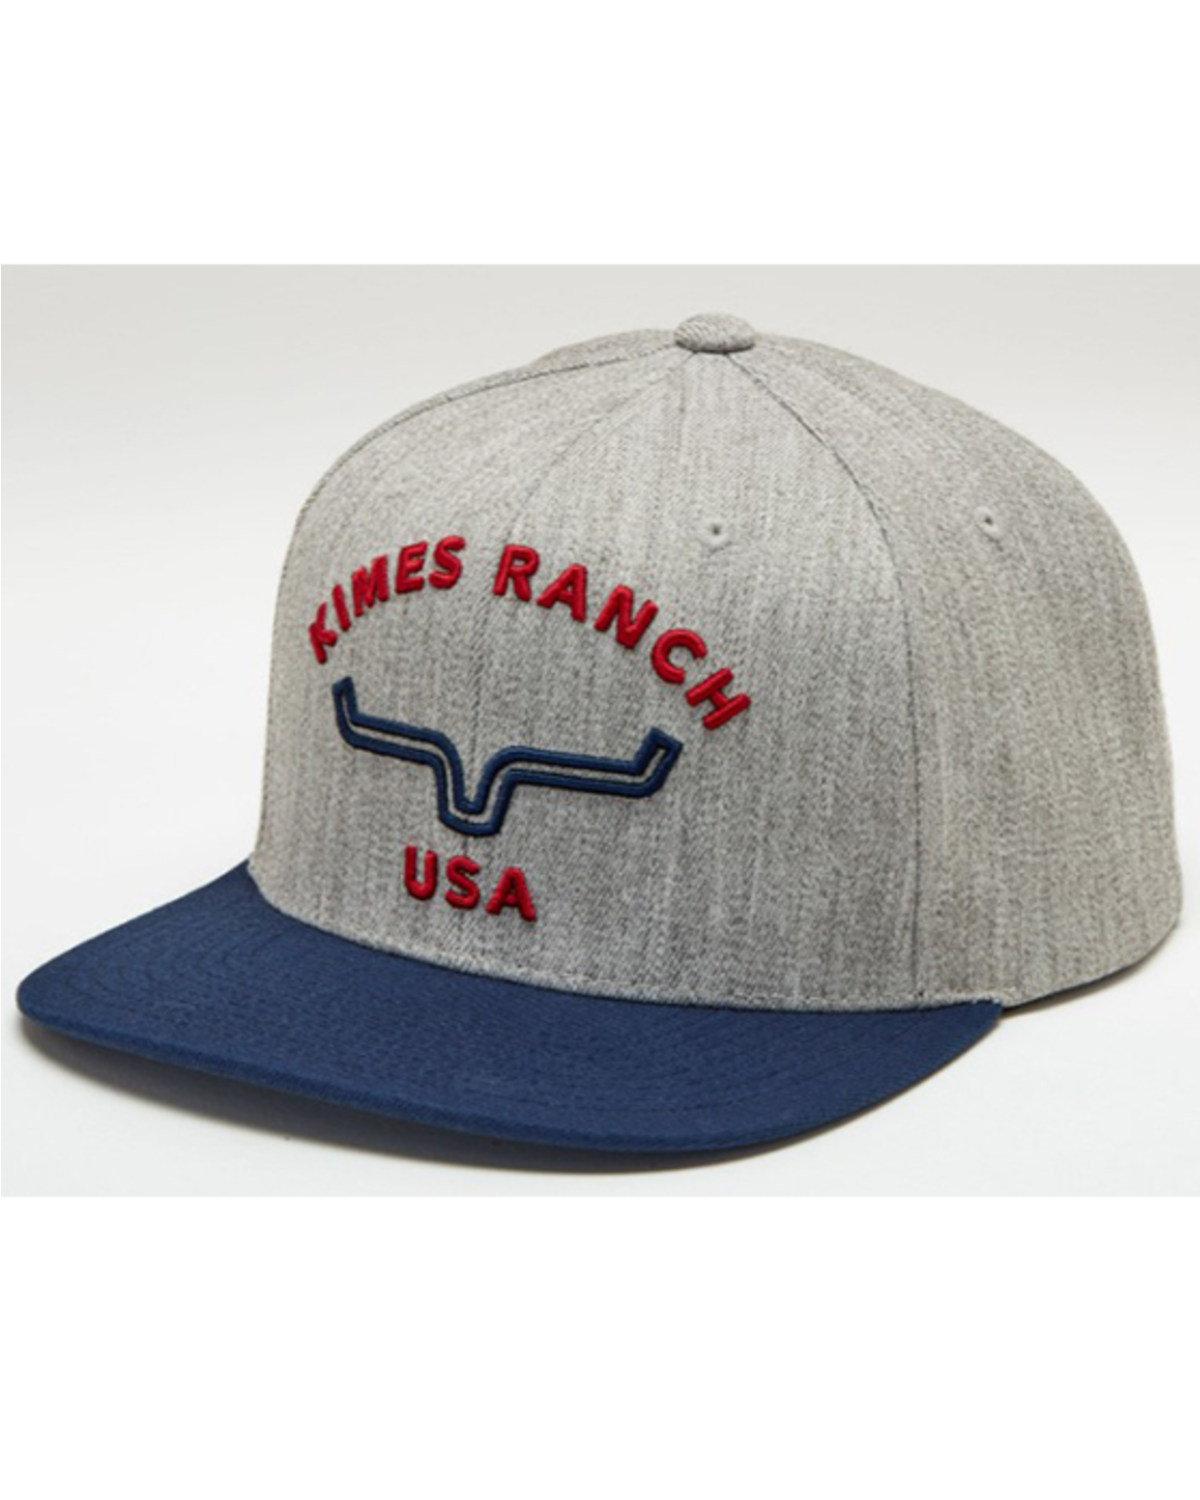 Kimes Ranch Men's Heather Gray Arched 3D Logo Mesh-Back Trucker Cap